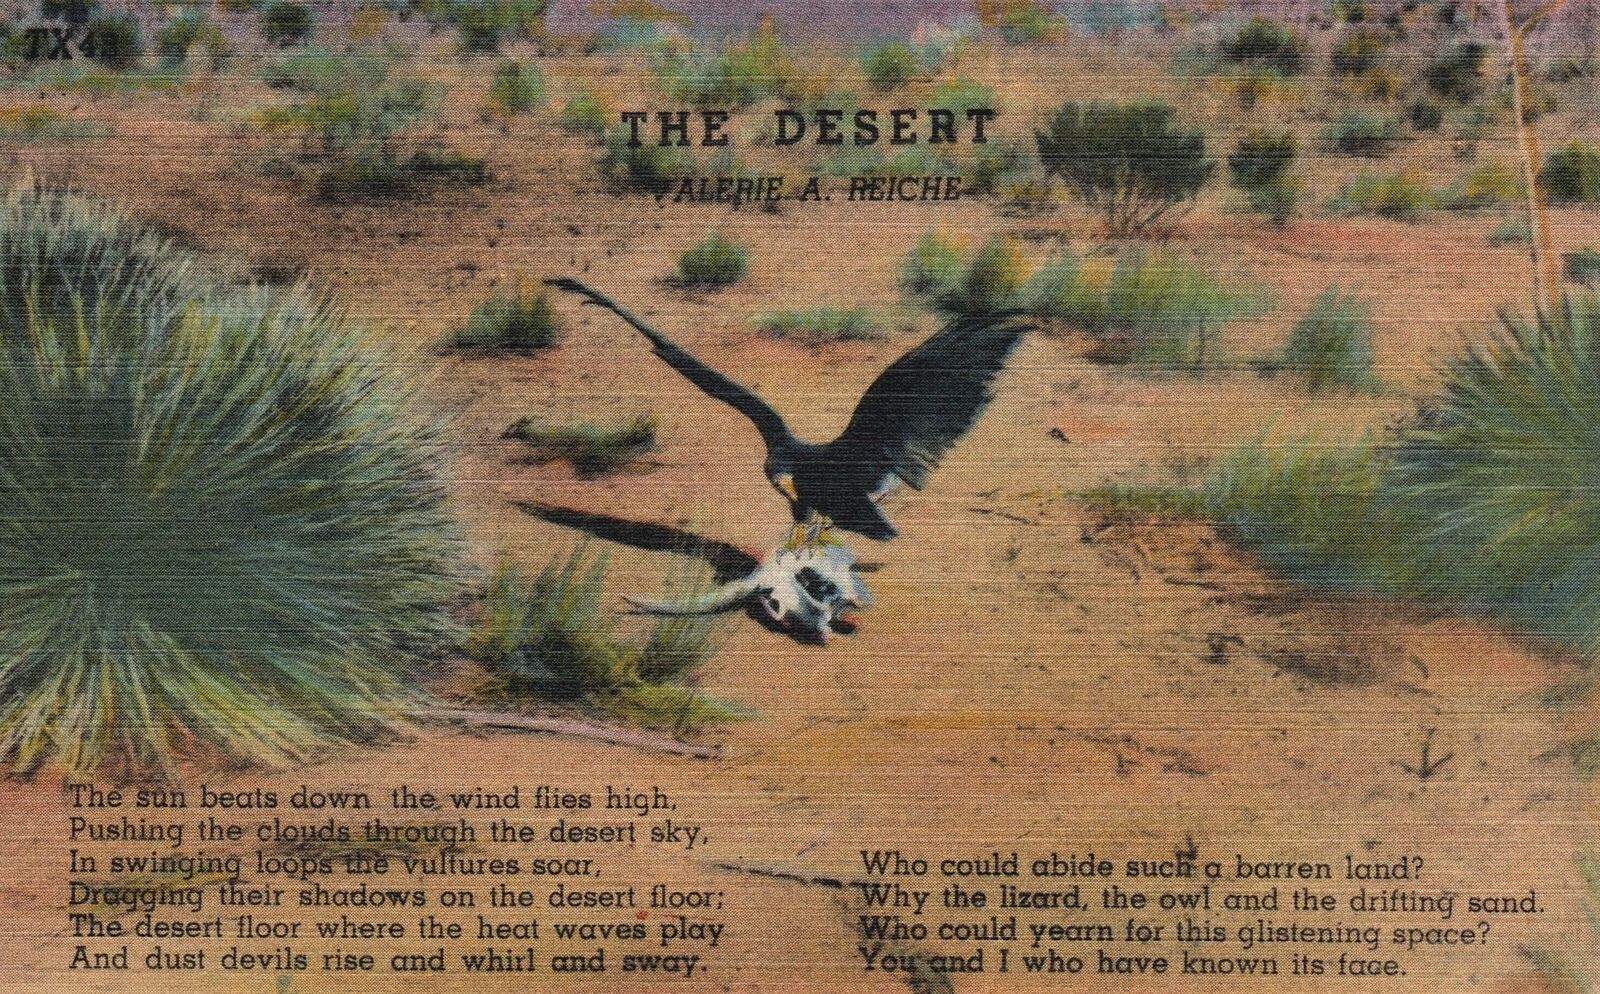 Vintage Postcard The Desert Wildflies Plants Drifting Sands Valerie A. Reich